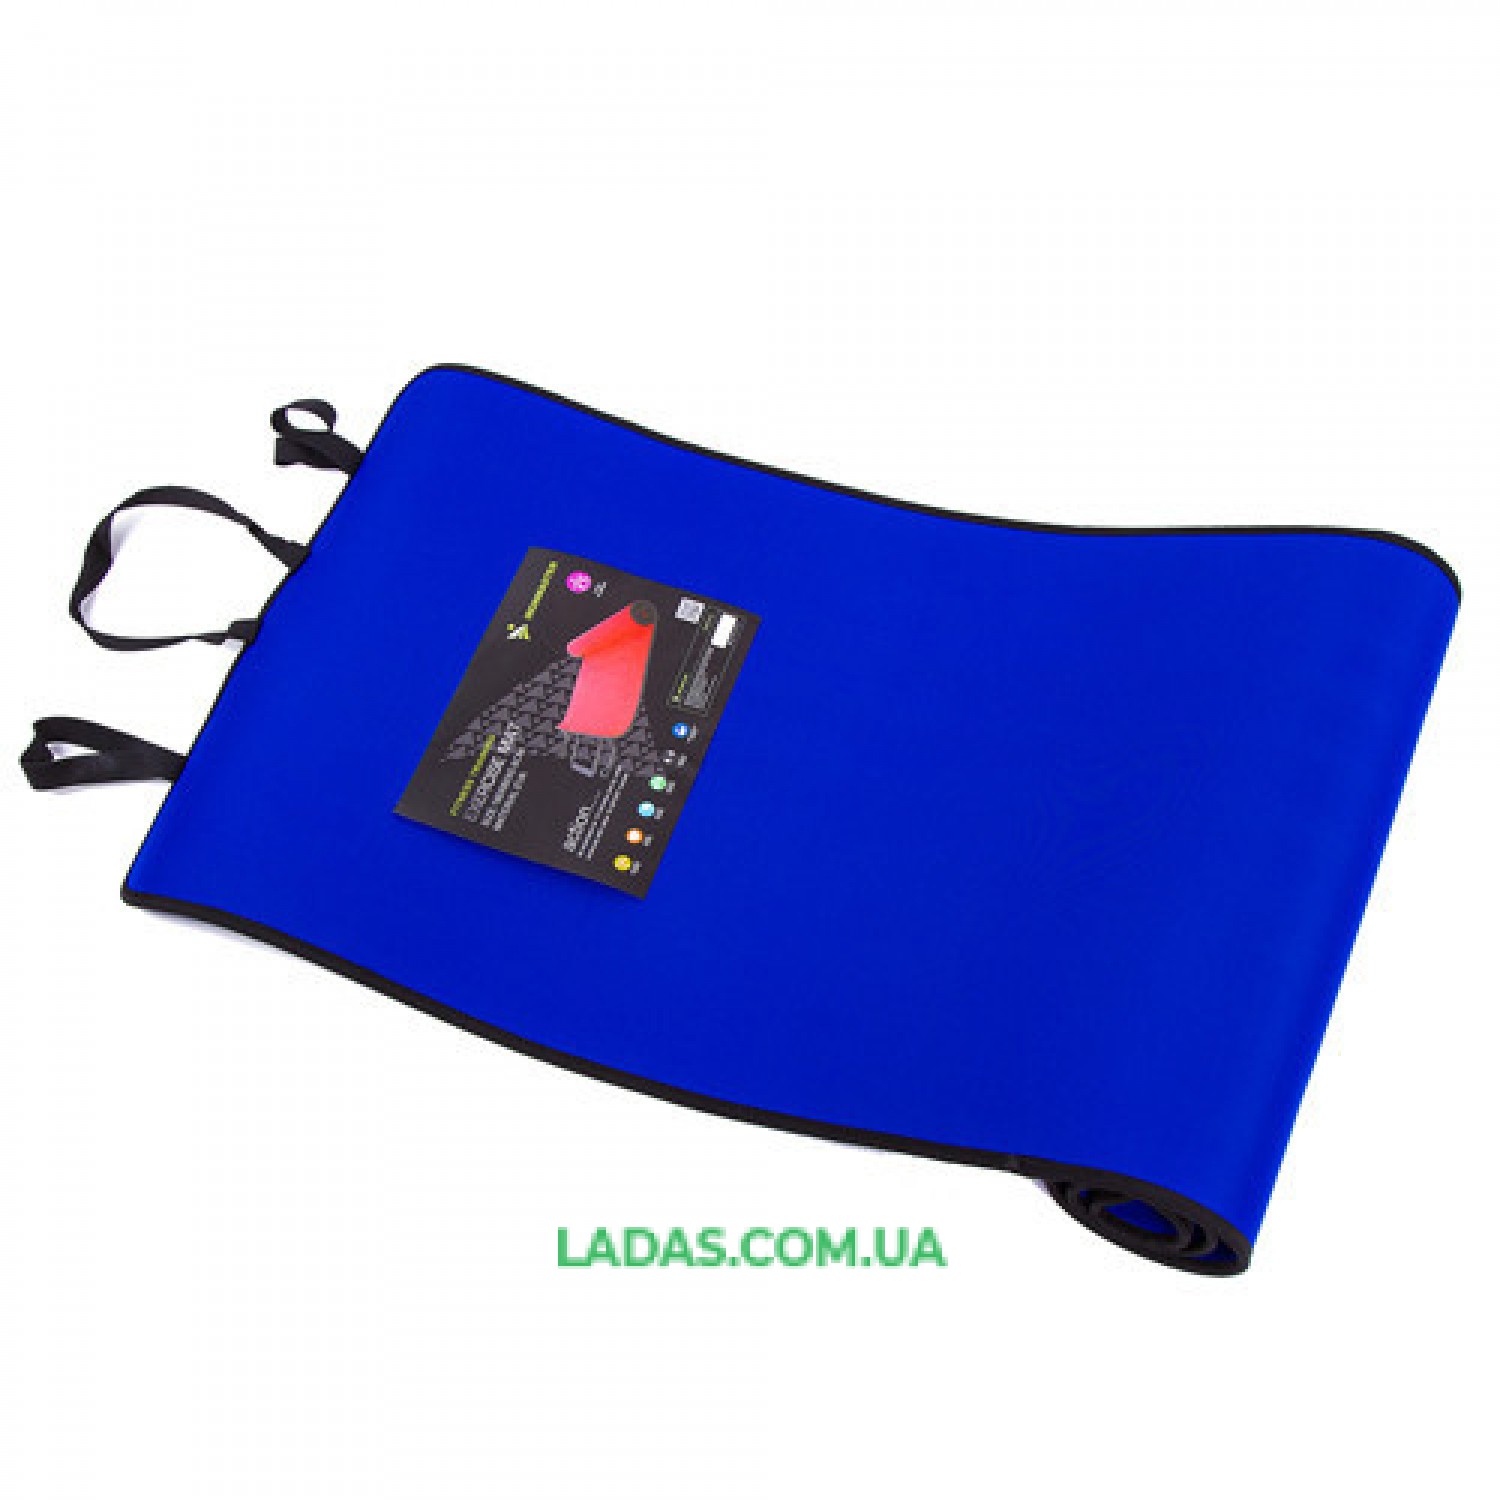 Йогамат, коврик для фитнеса, EVA, IronMaster 180x60x0.6см, синий